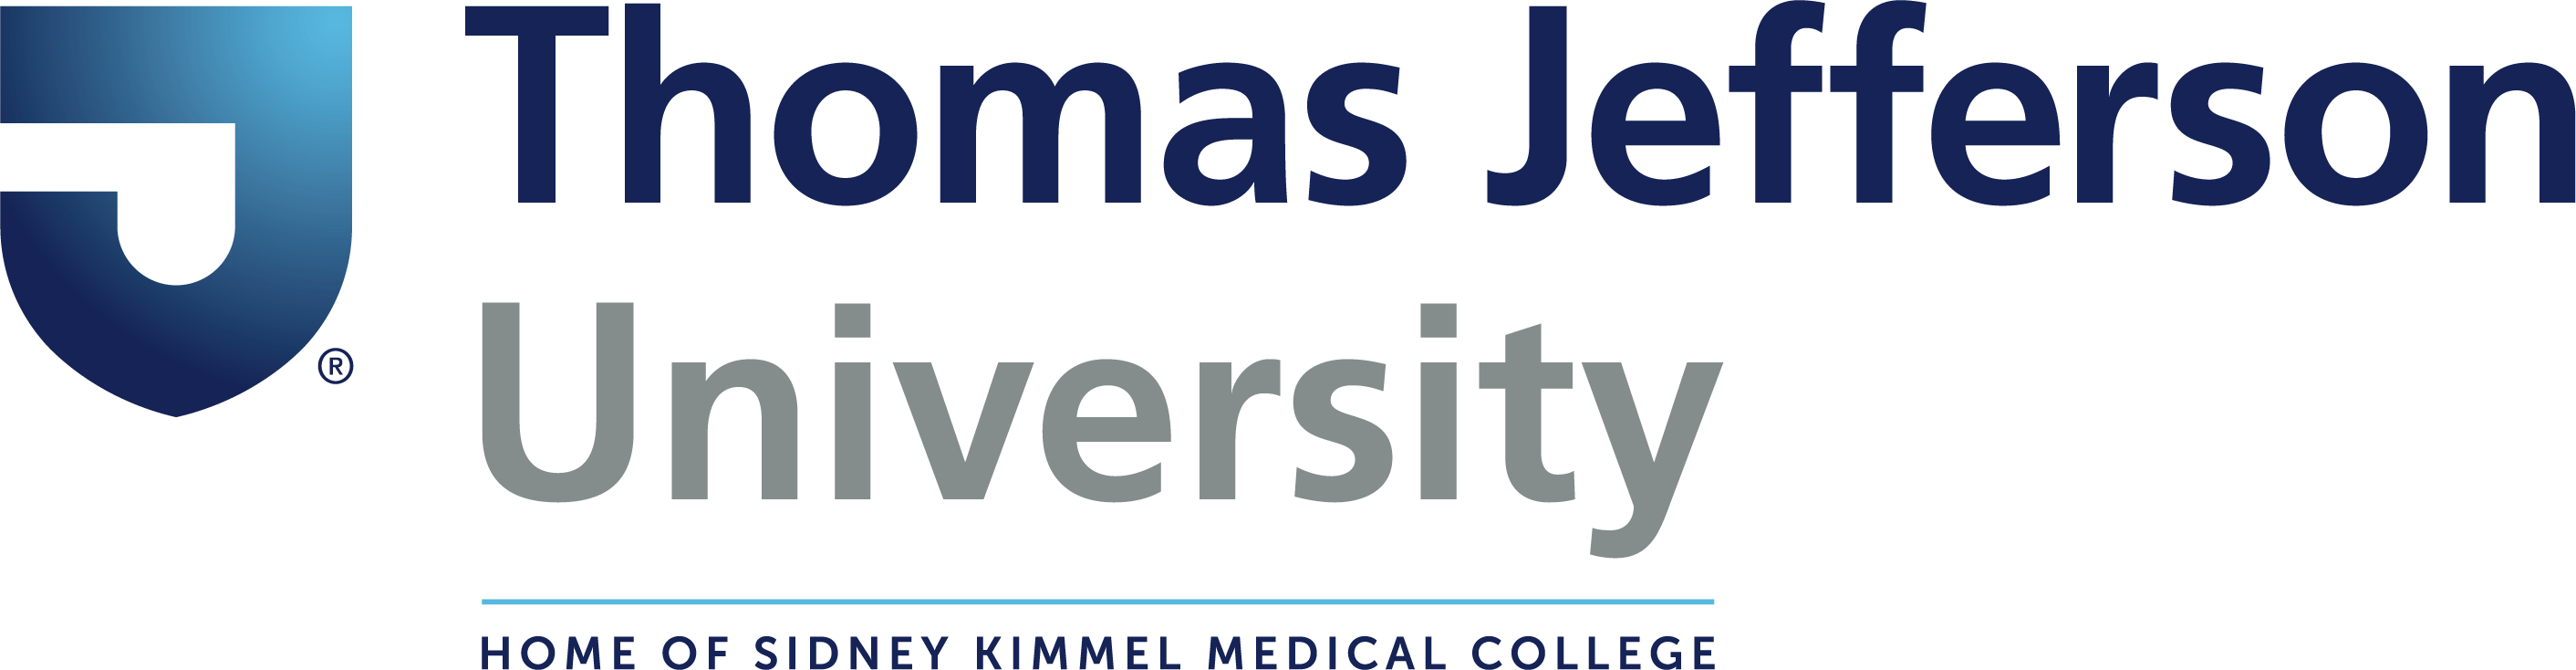 thomas-jefferson-university-logo.png